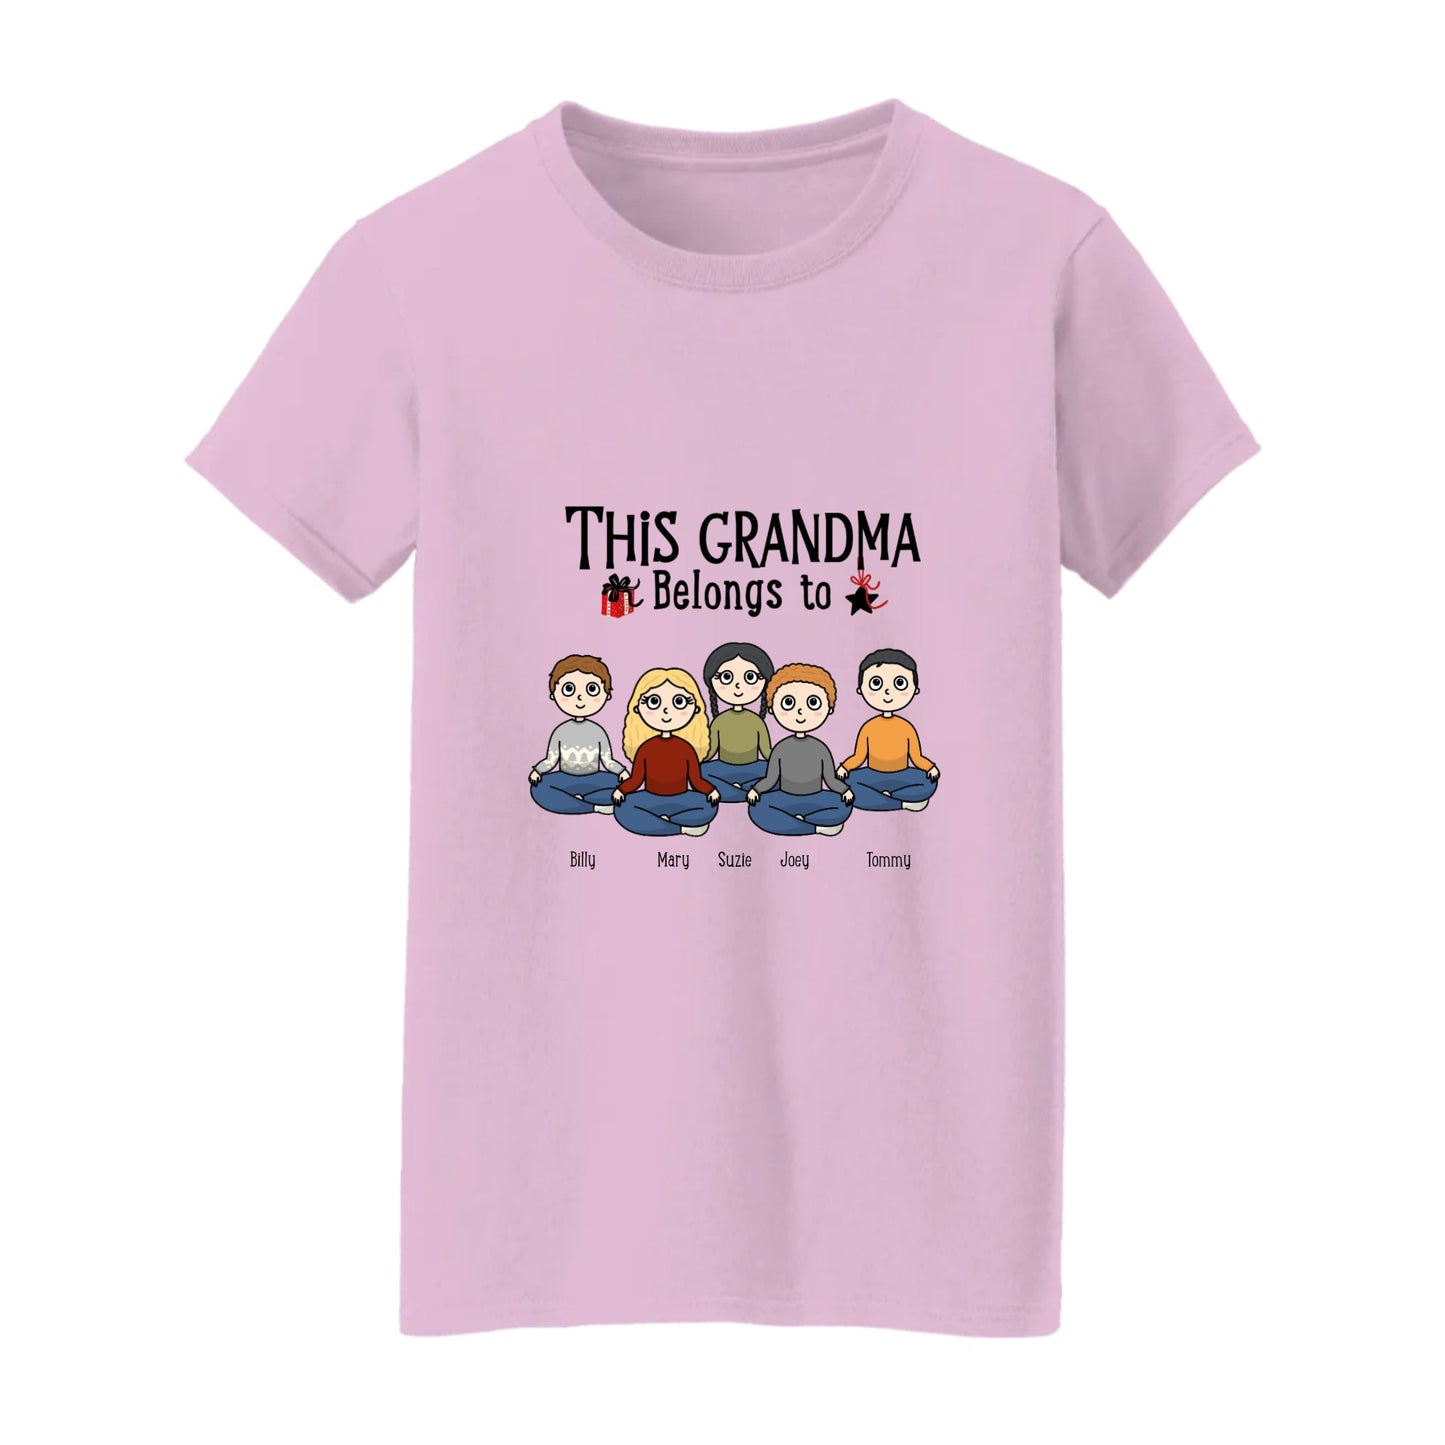 Ladies Personali-T Shirt - This Grandma Belongs to